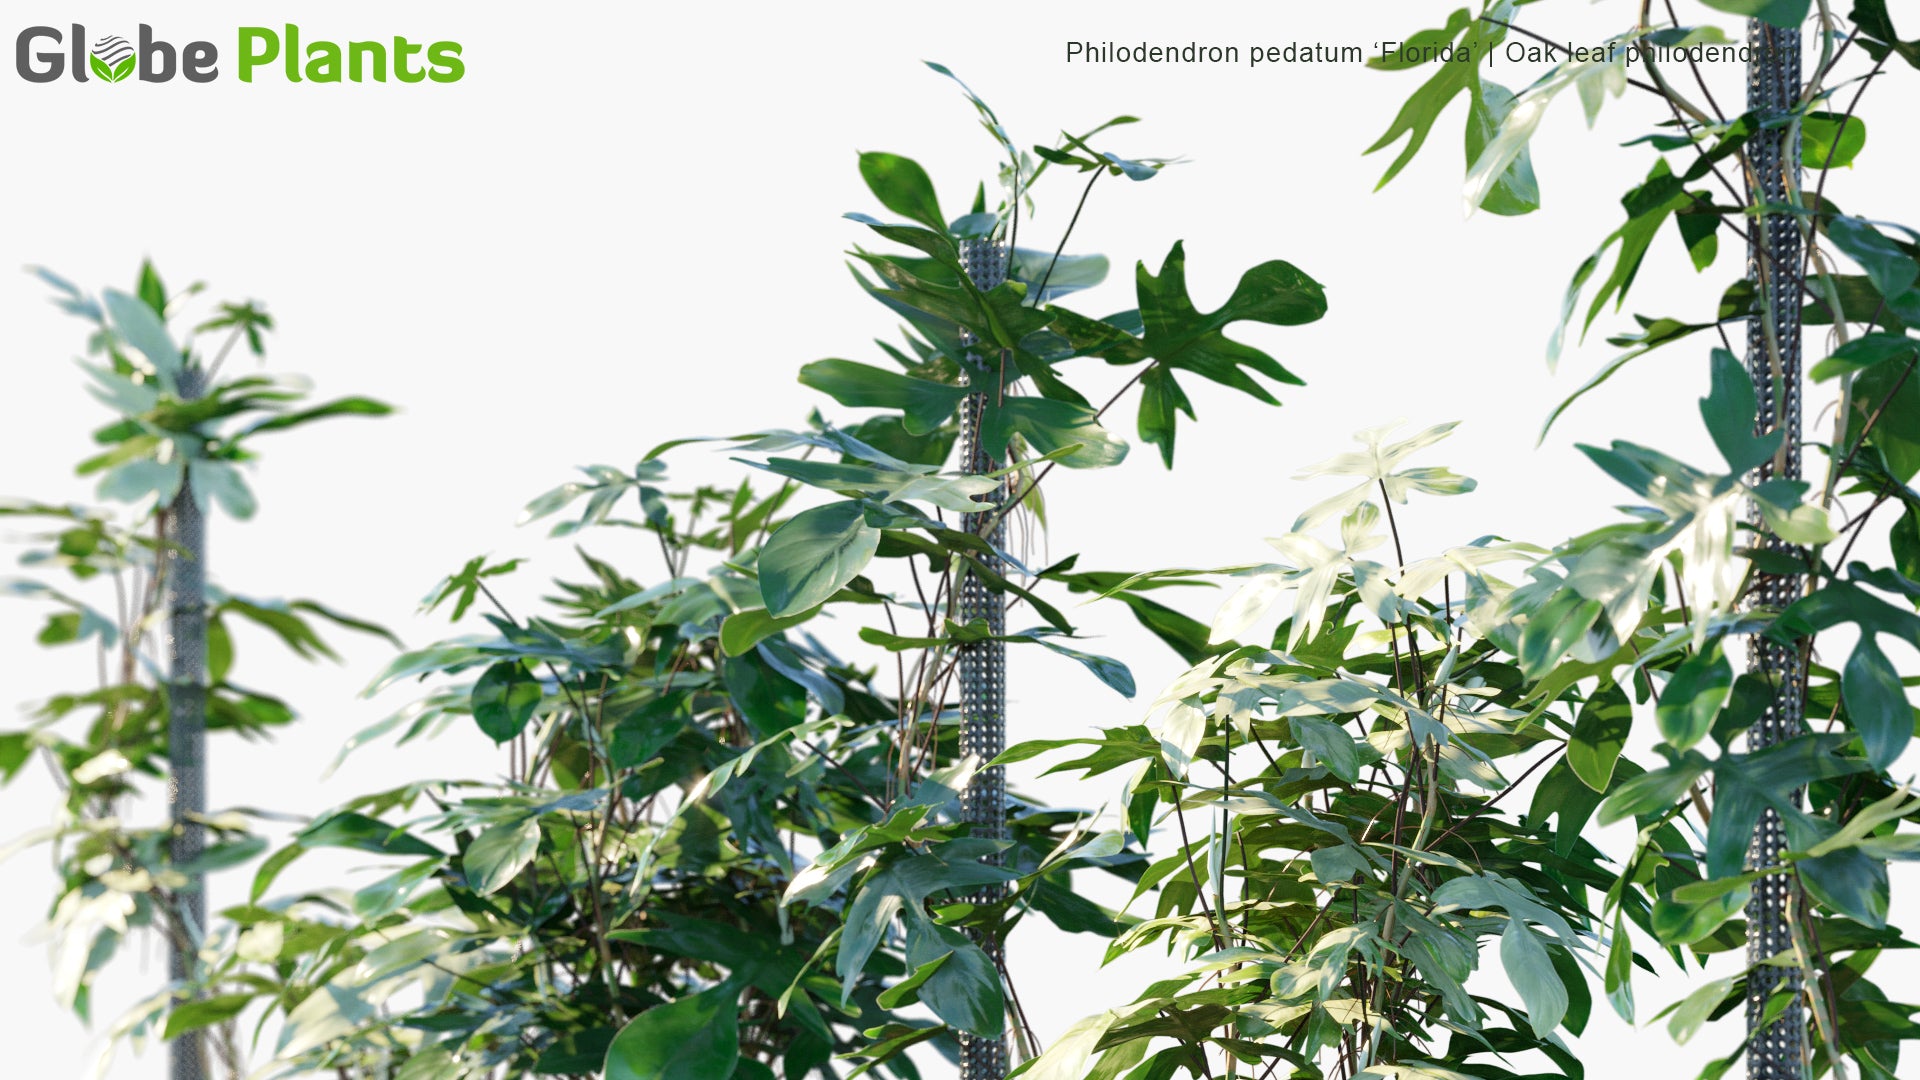 Philodendron Pedatum 'Florida' - Oak Leaf Philodendron